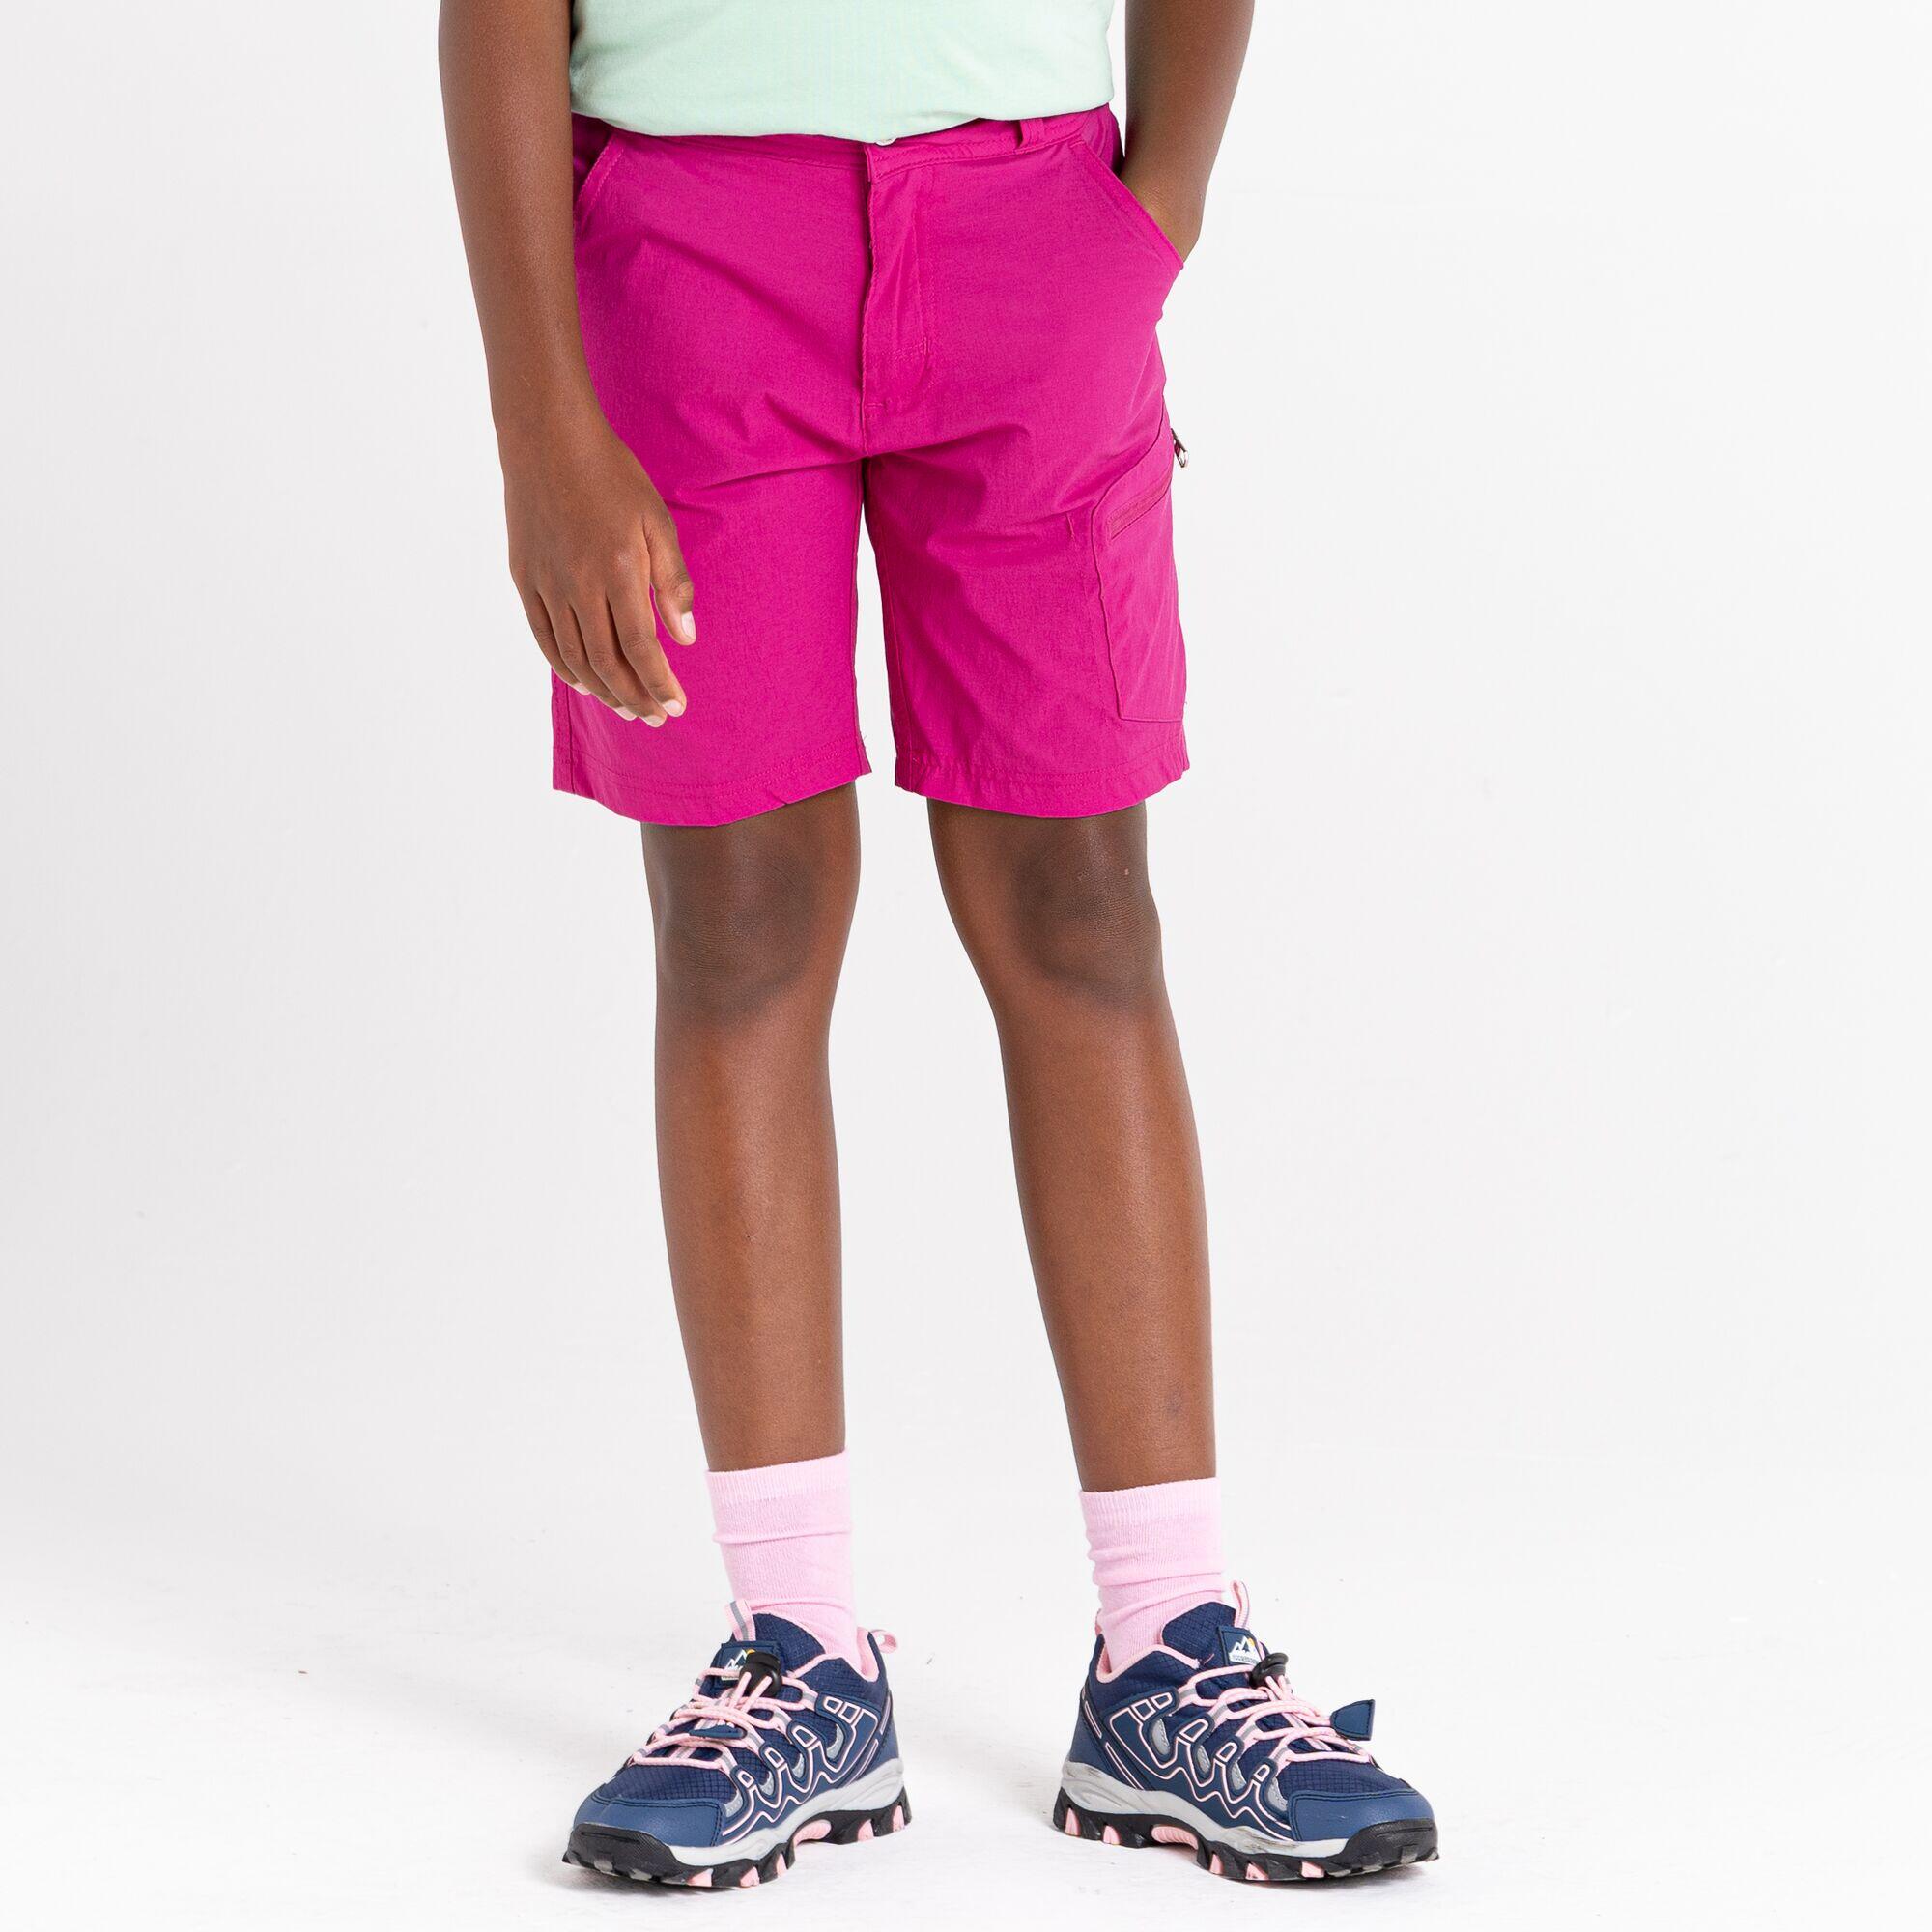 Reprise II Kids Hiking Shorts - Fuchsia Pink 4/5